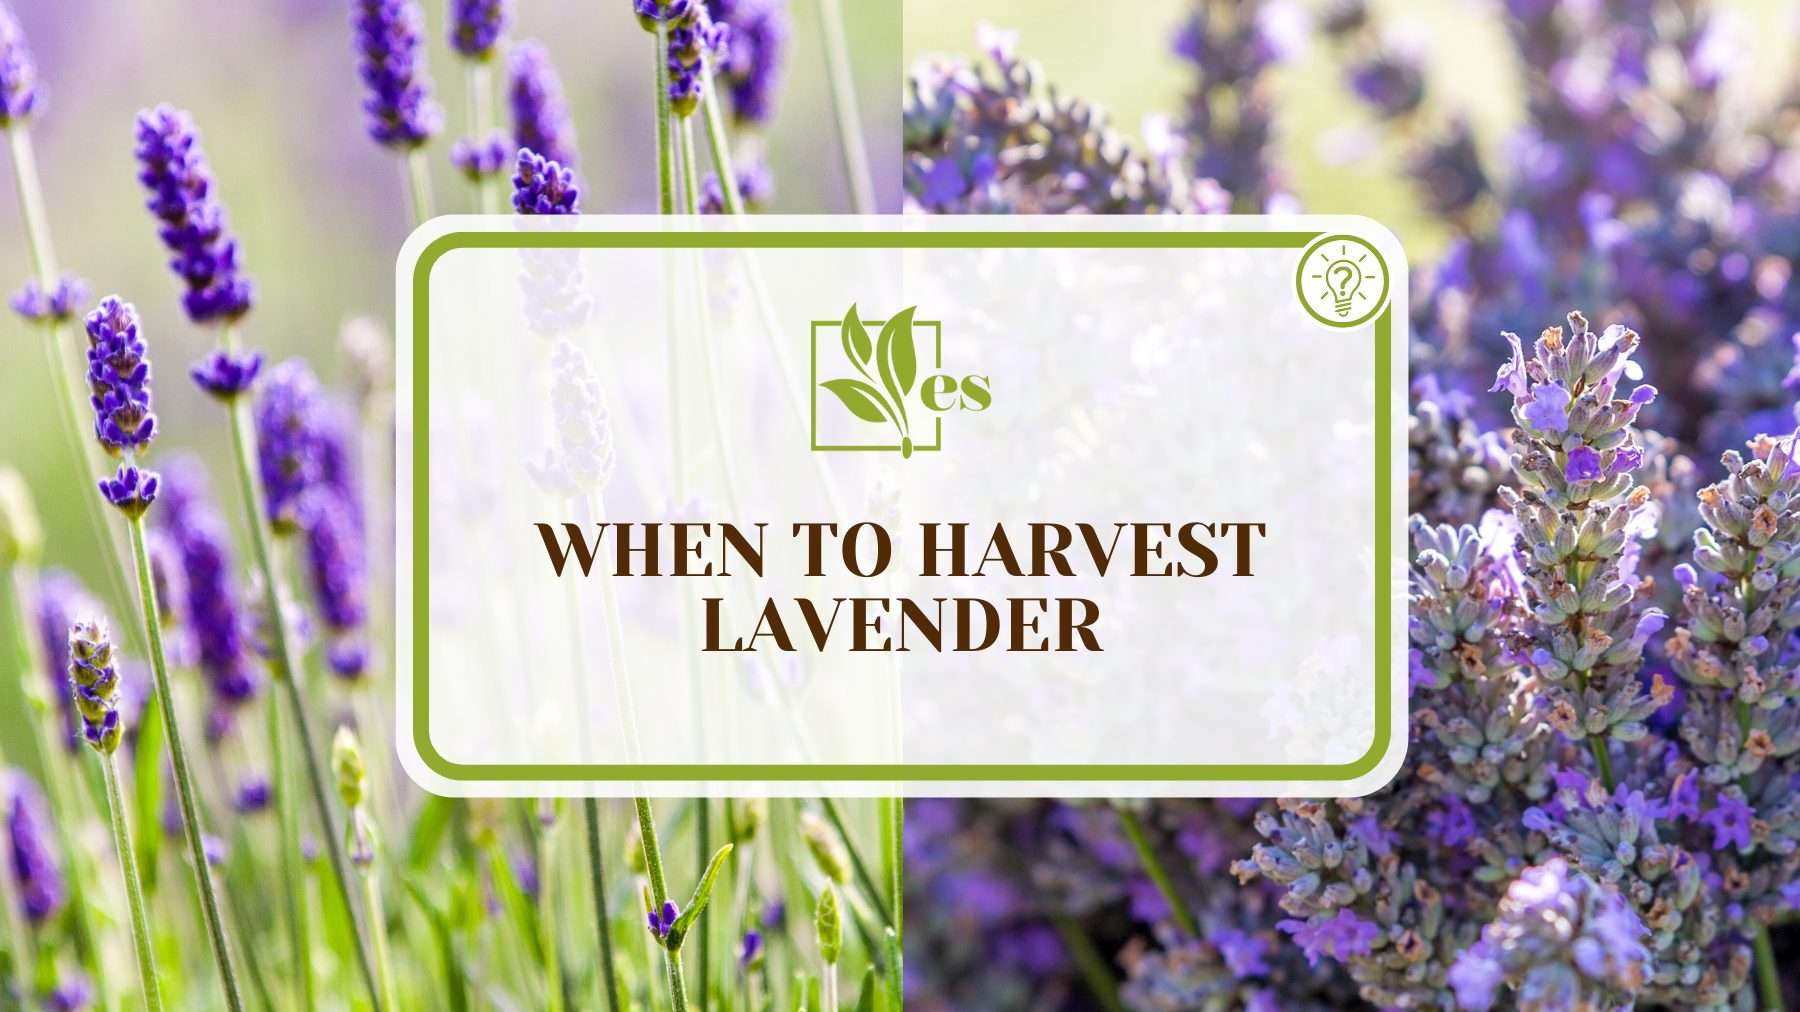 Ideal Timing to Harvest Lavender